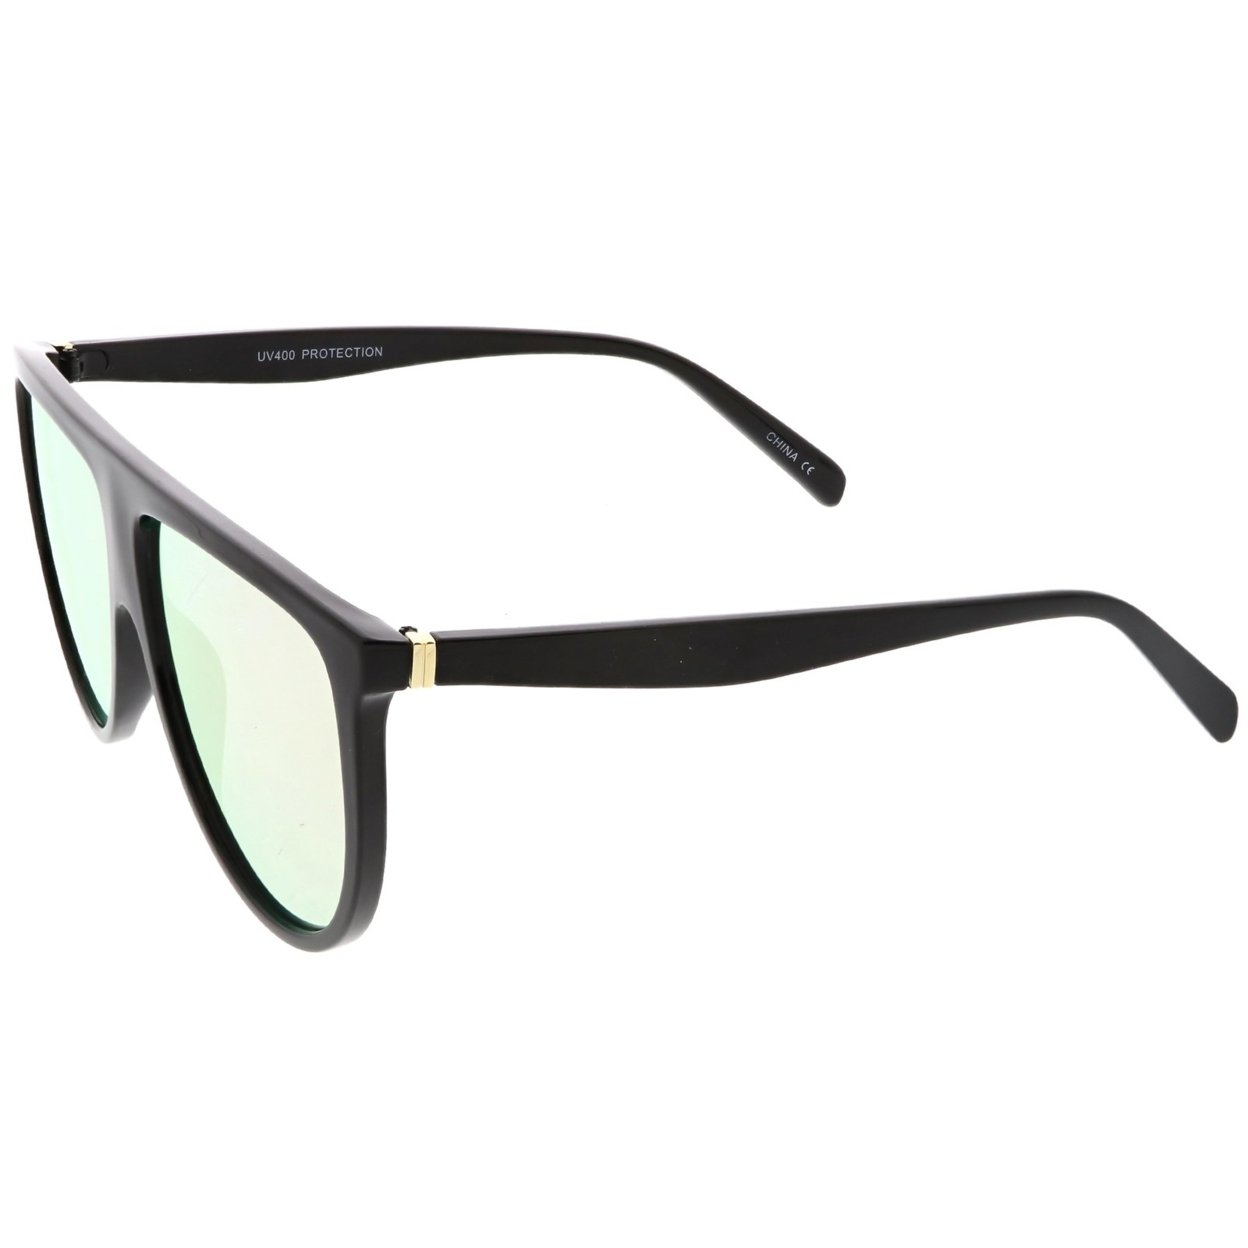 Oversize Modern Aviator Sunglasses Flat Top Color Mirrored Lens 59mm - Black / Pink Mirror